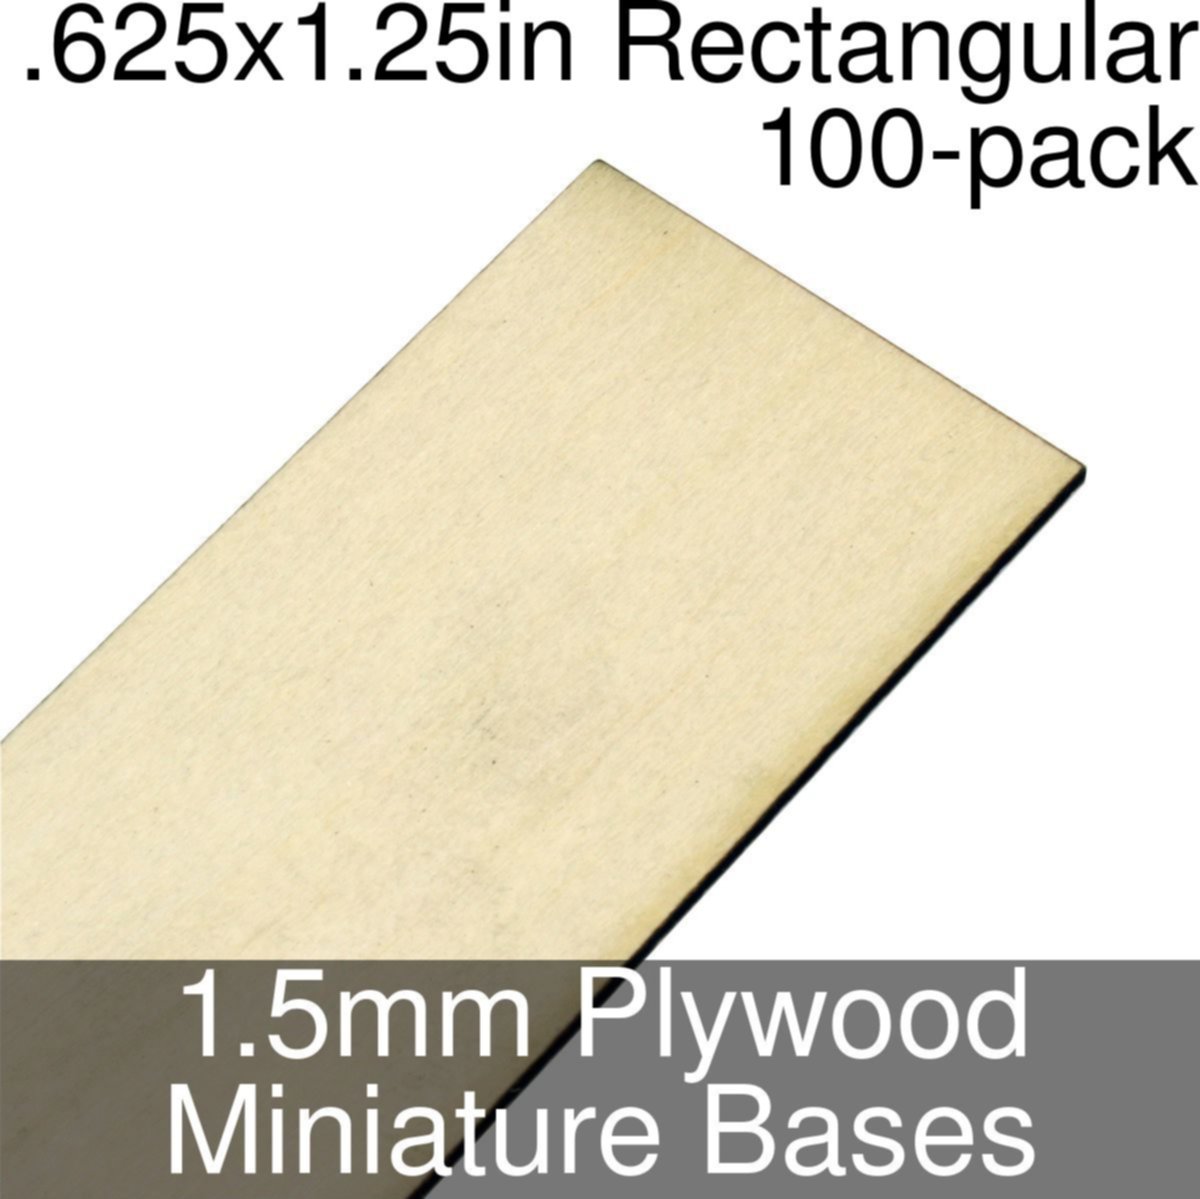 .625x1.25-inch rectangular miniature bases